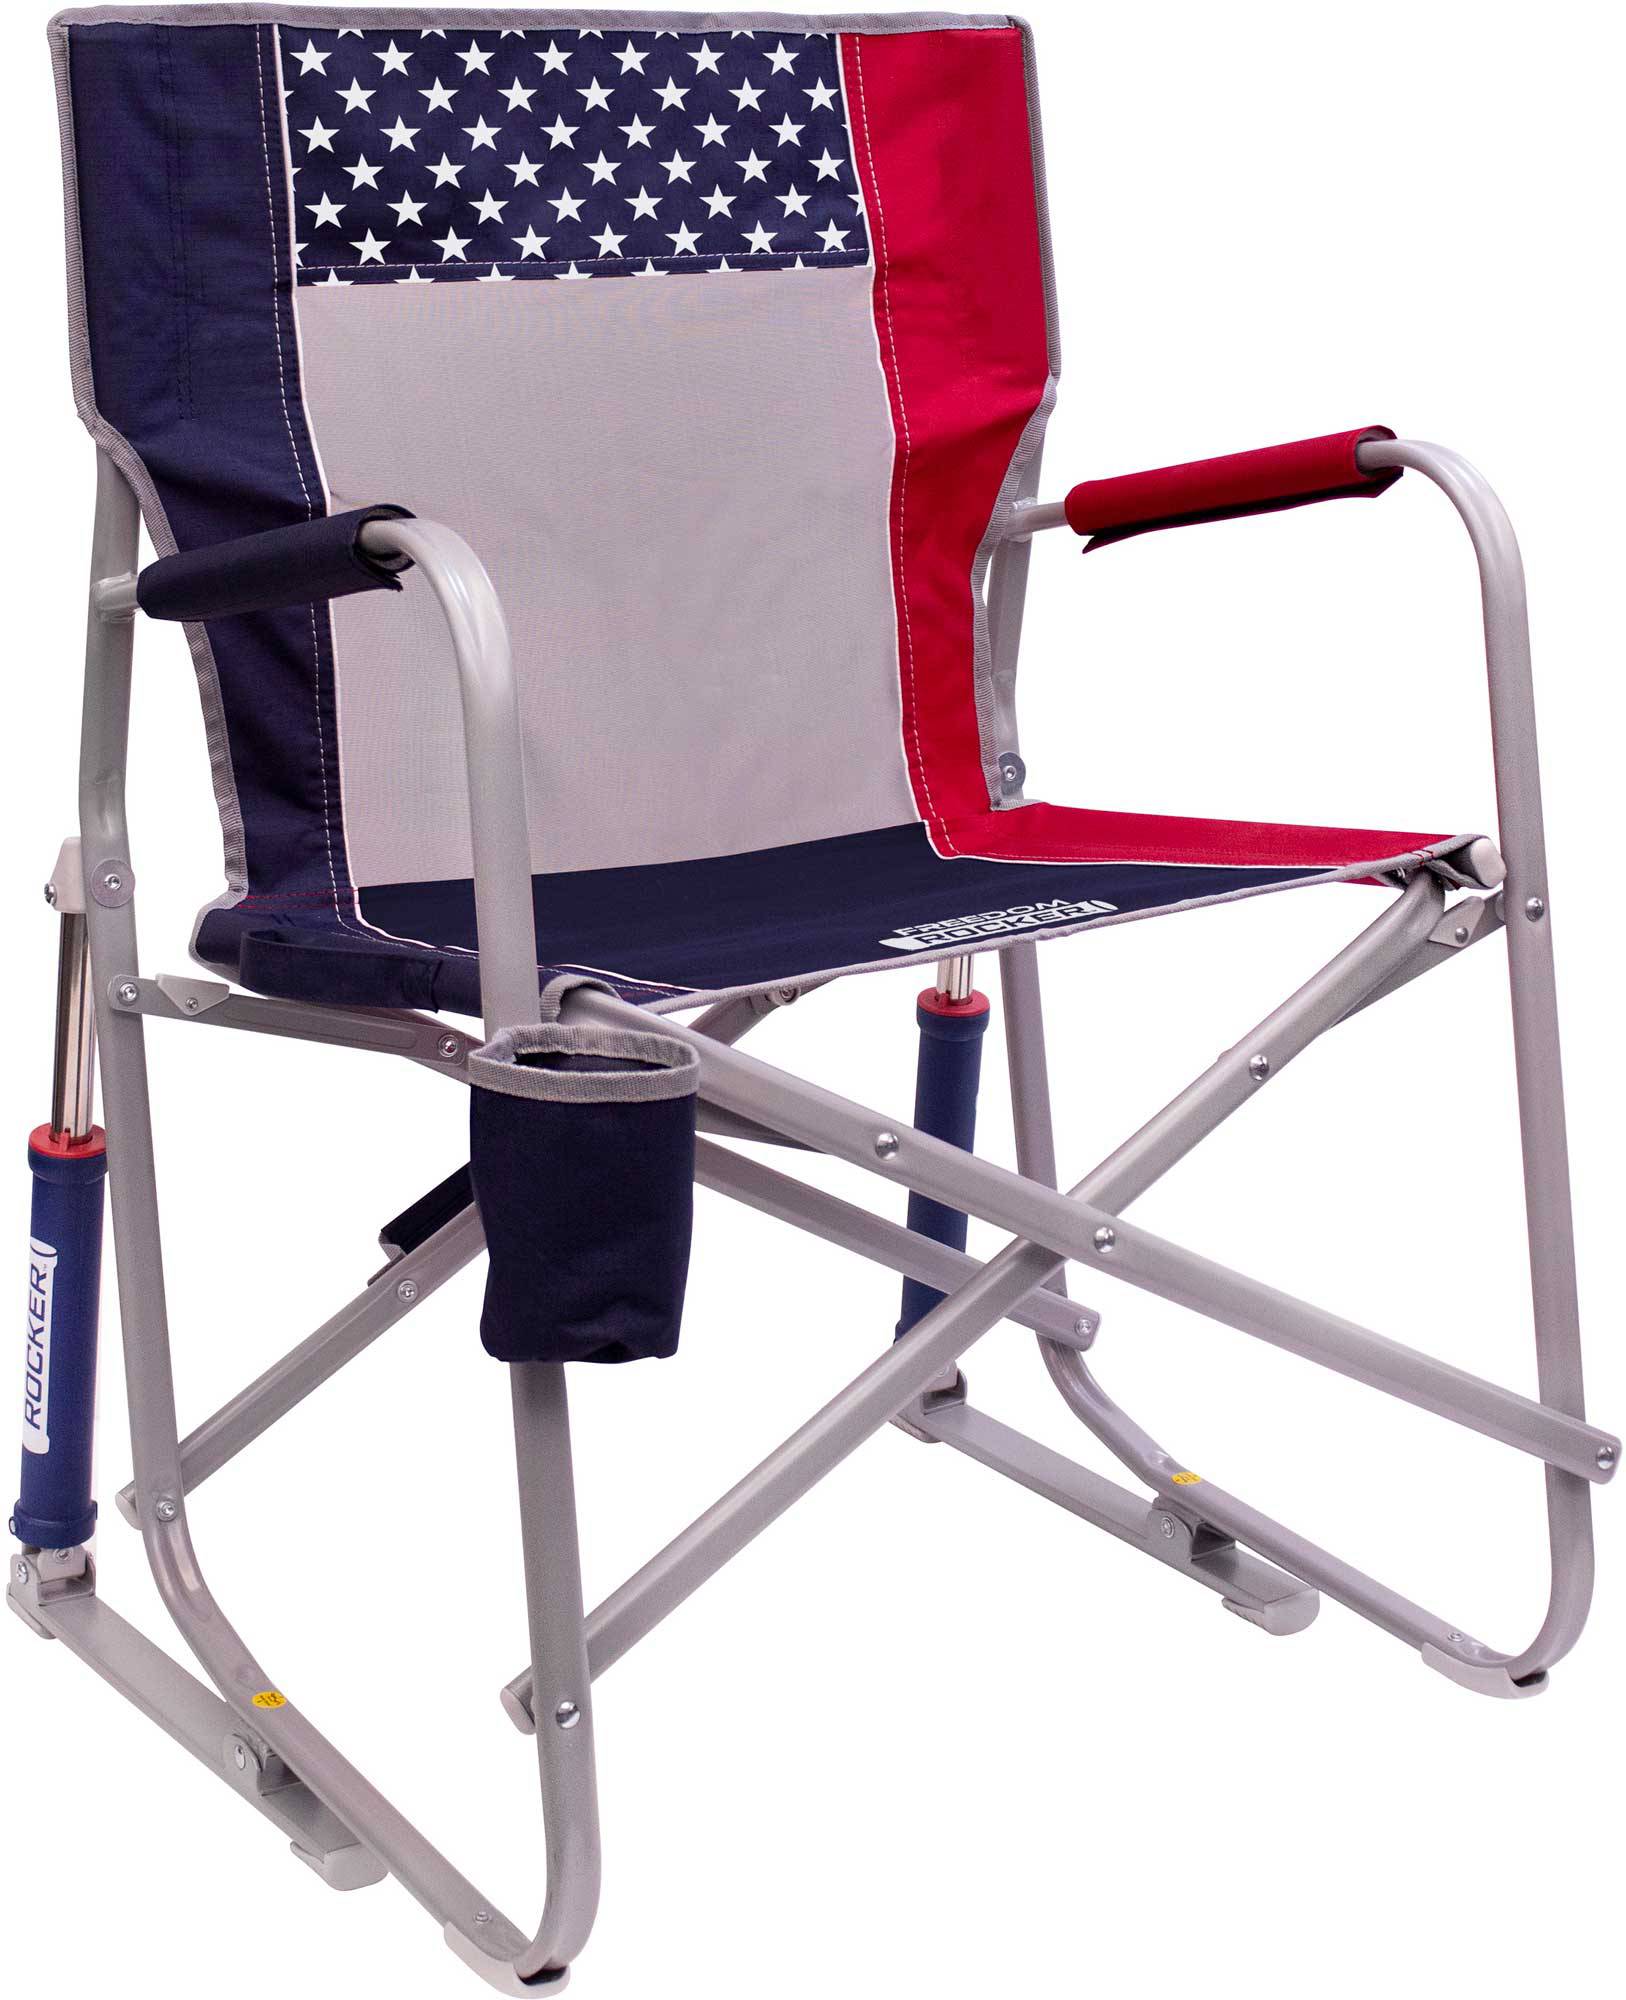 Featured image of post Outdoor Blue Rocking Chair : Goplus blue folding zero gravity rocking chair rocker with headrest.